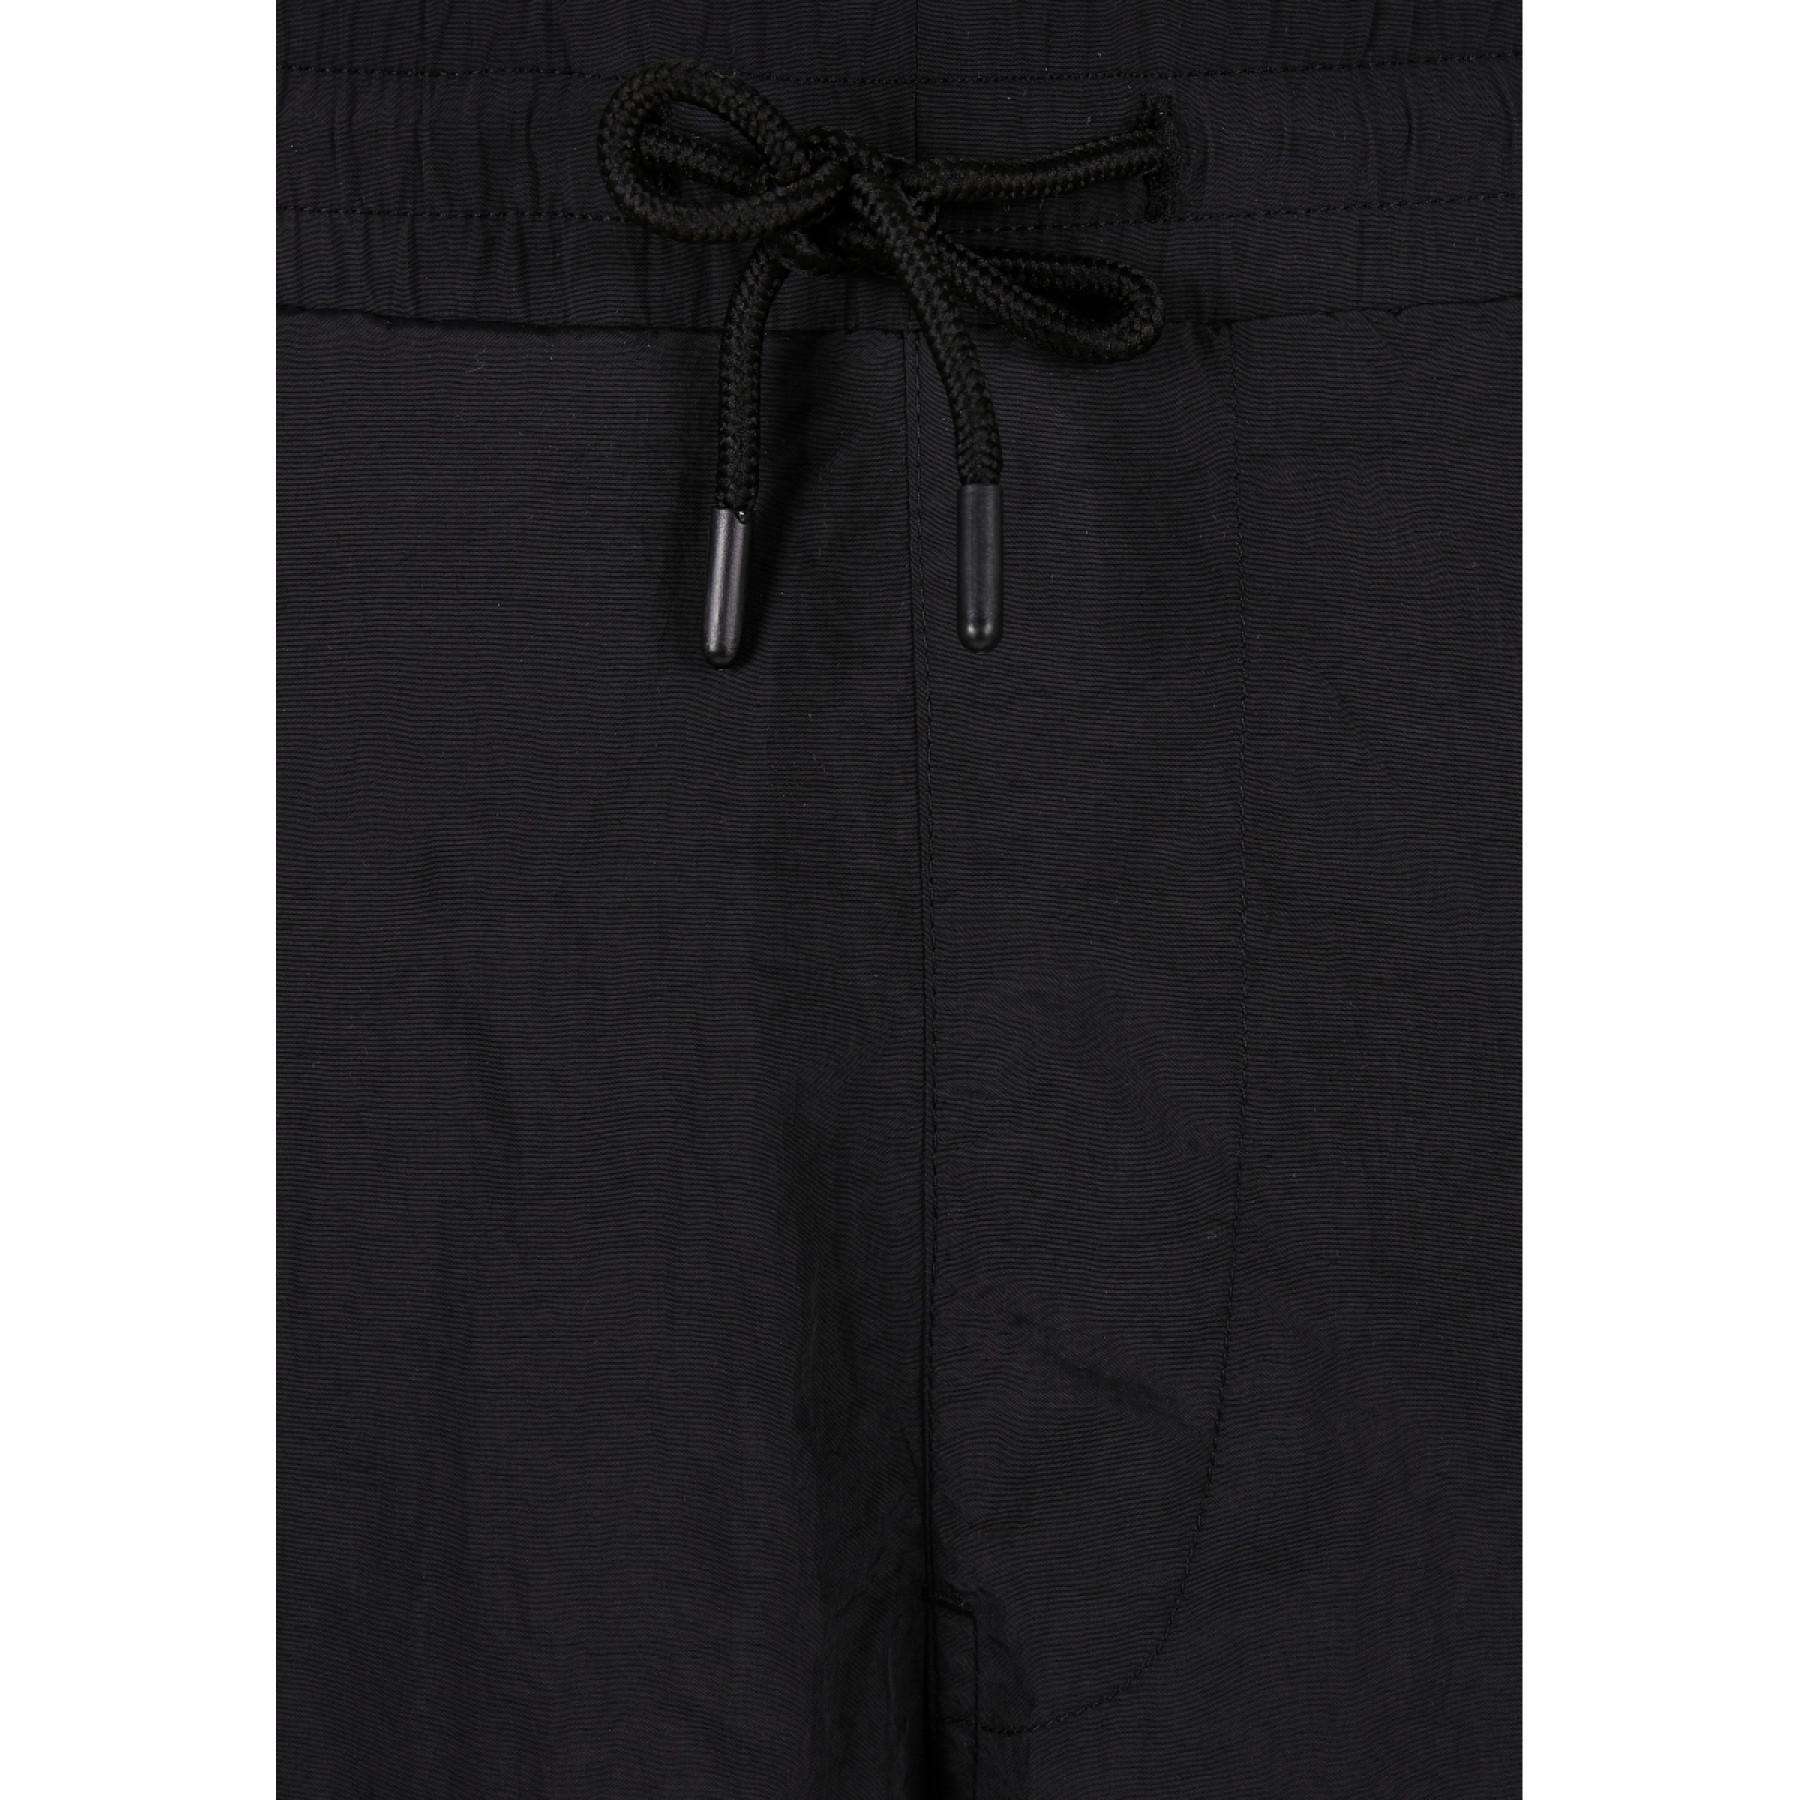 Pantaloncini Urban Classics nylon cargo-Taglie grandi